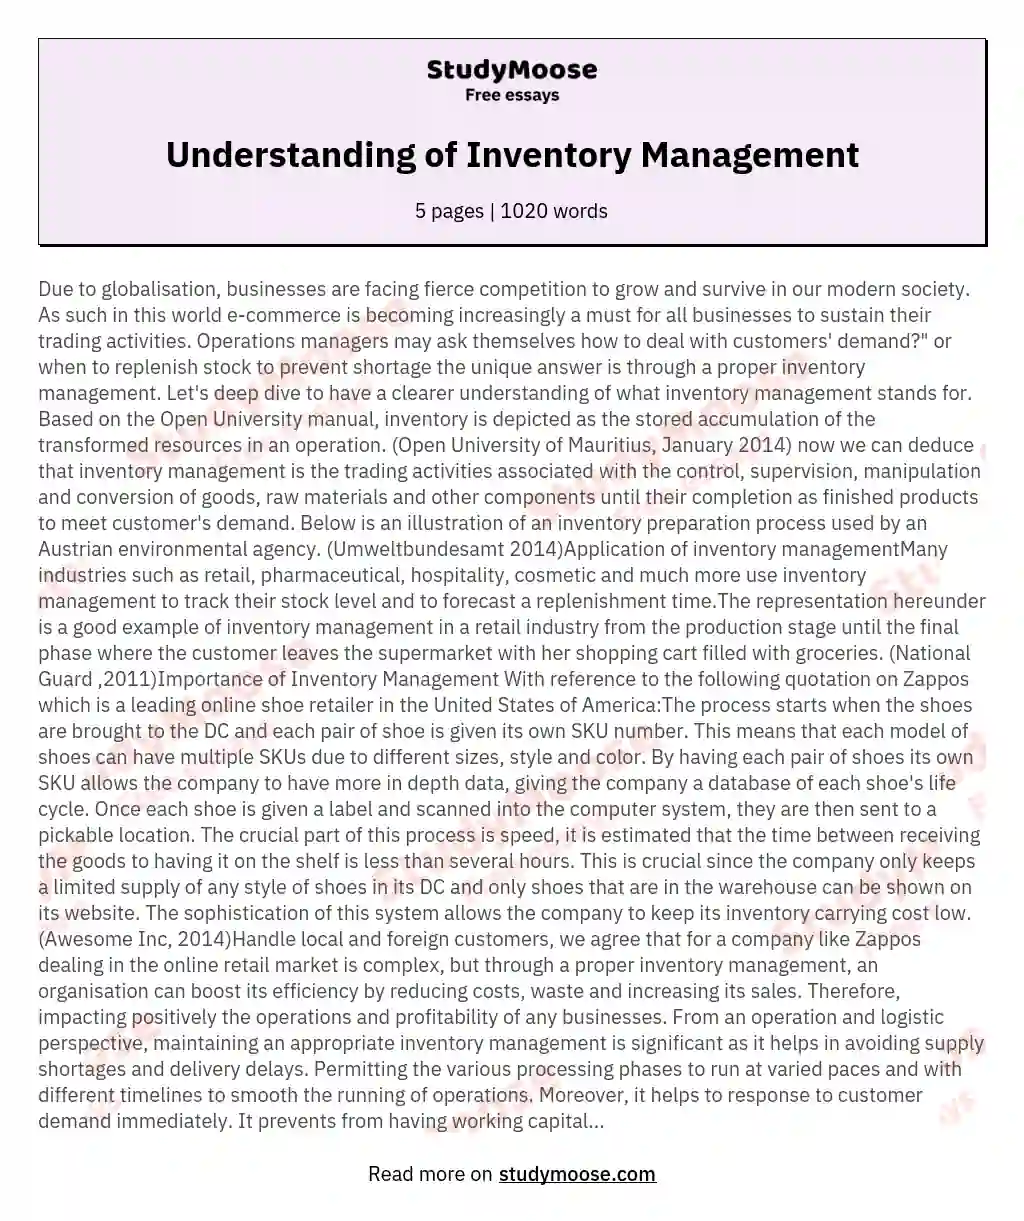 Understanding of Inventory Management essay